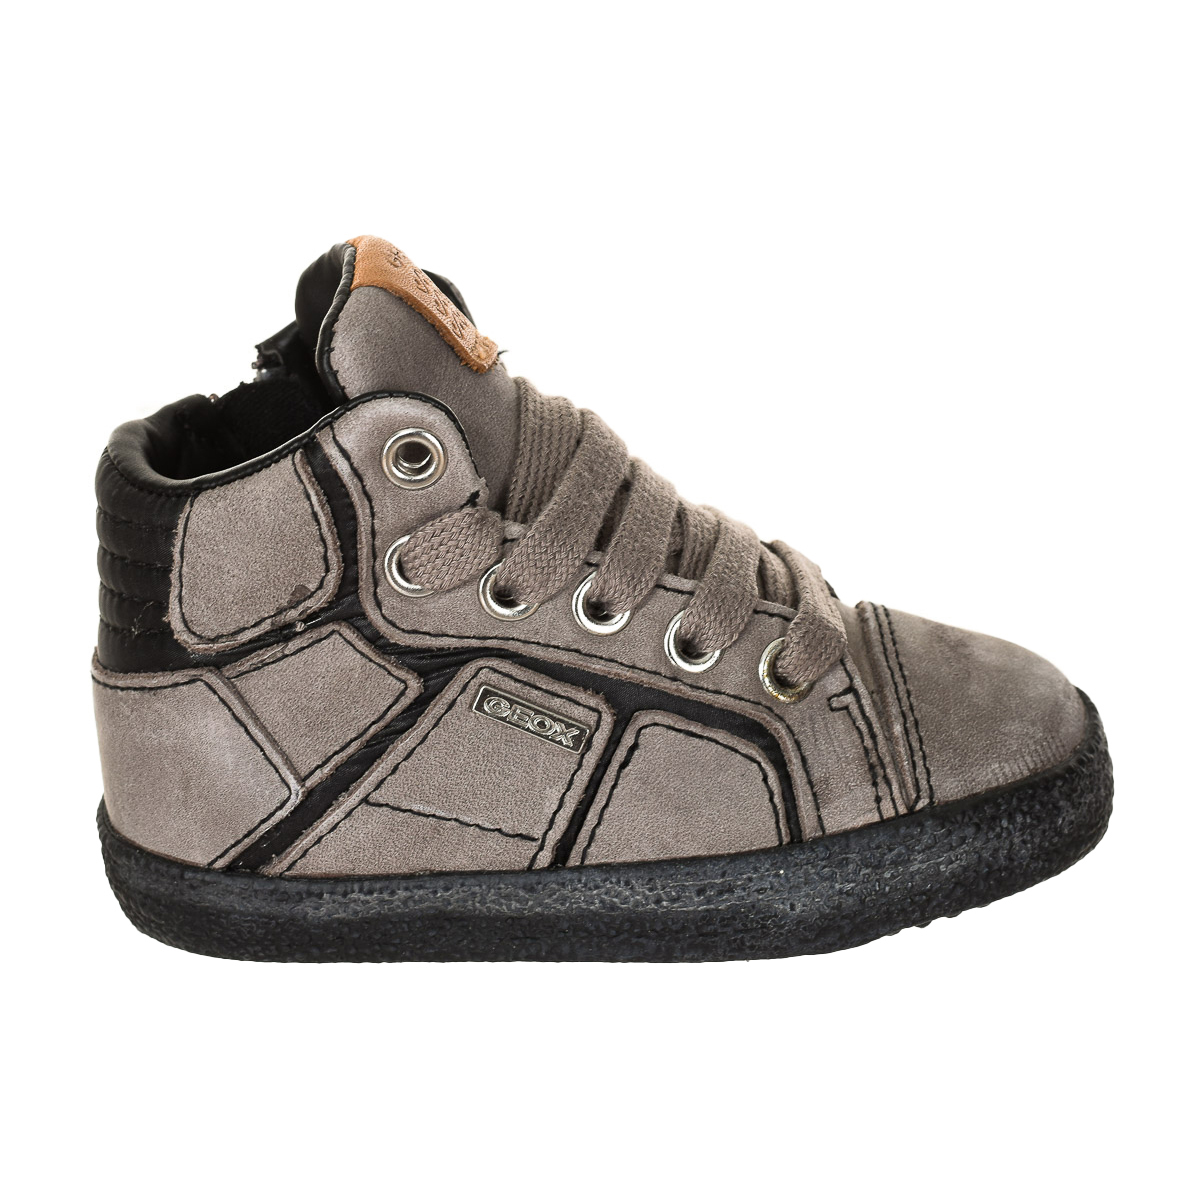 Sneaker Abotinado Geox B44a7c-0cl11 - marron - 